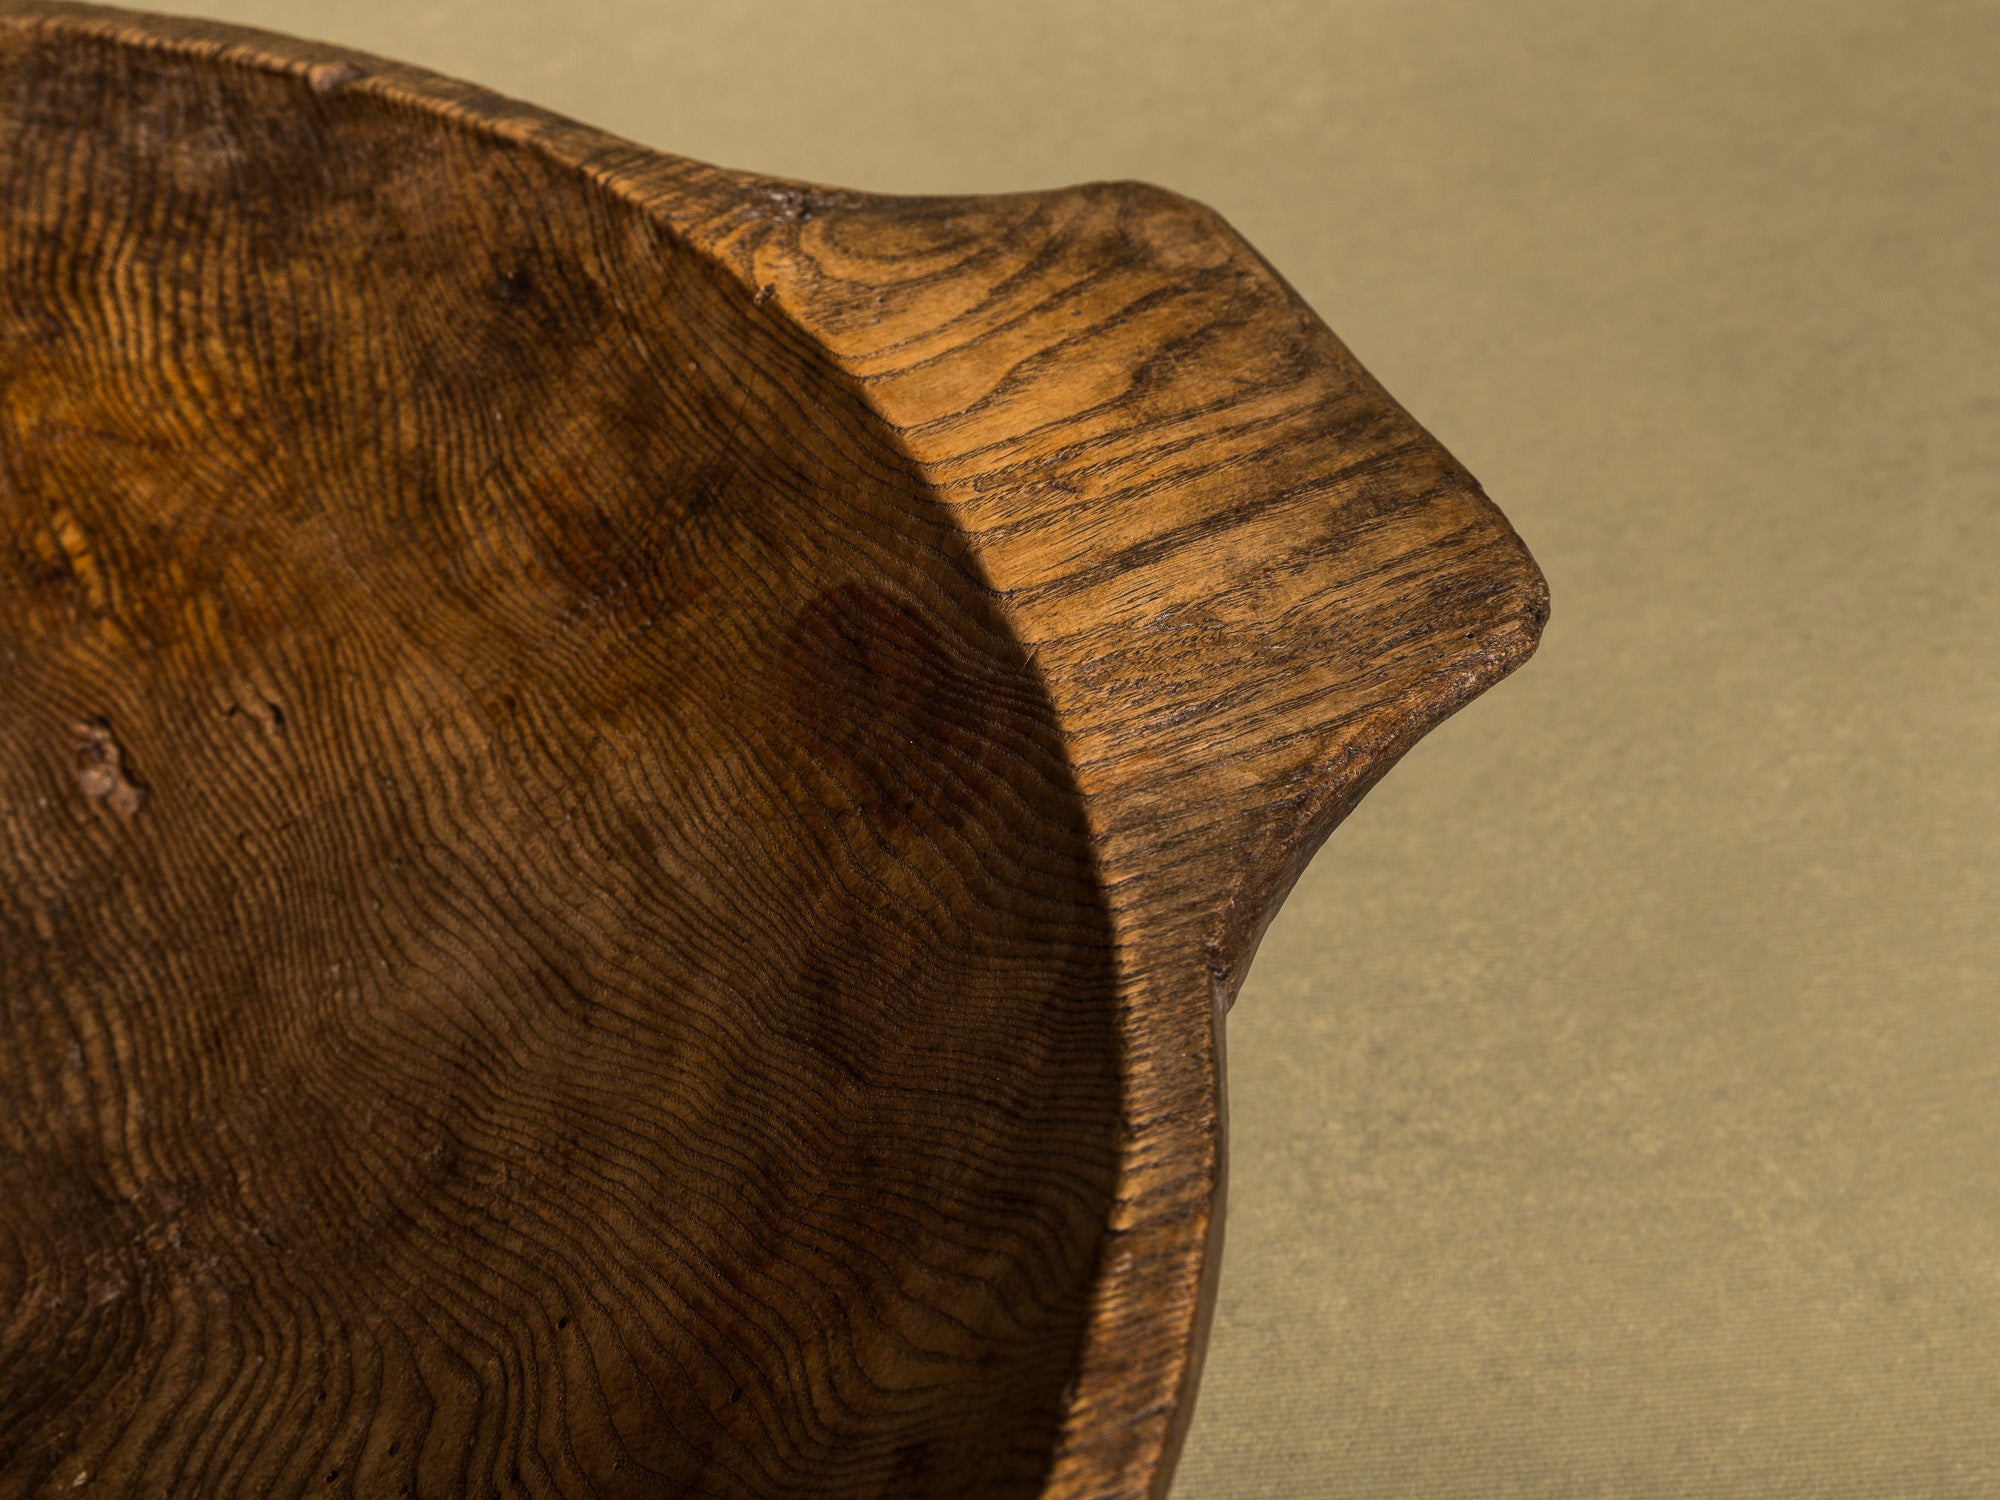 Ancienne coupe à faire le pain / pétrin, art paysan, Angleterre (XIXe siècle)..Old wood carved bread & dought bowl, Peasant art, England (19th century)